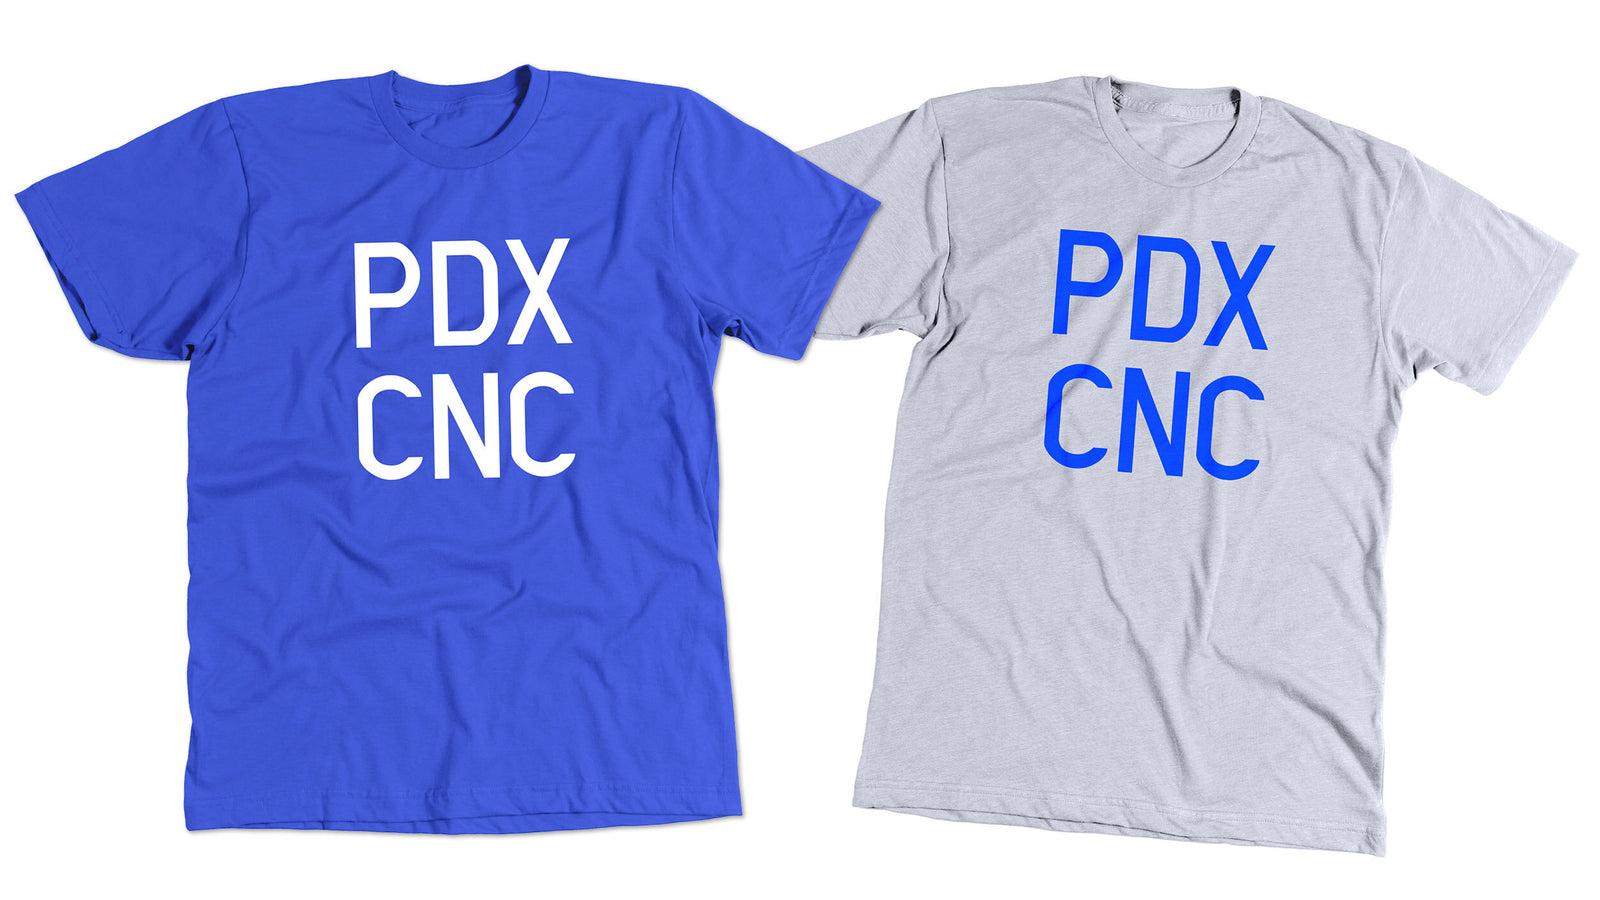 New PDX CNC Tees